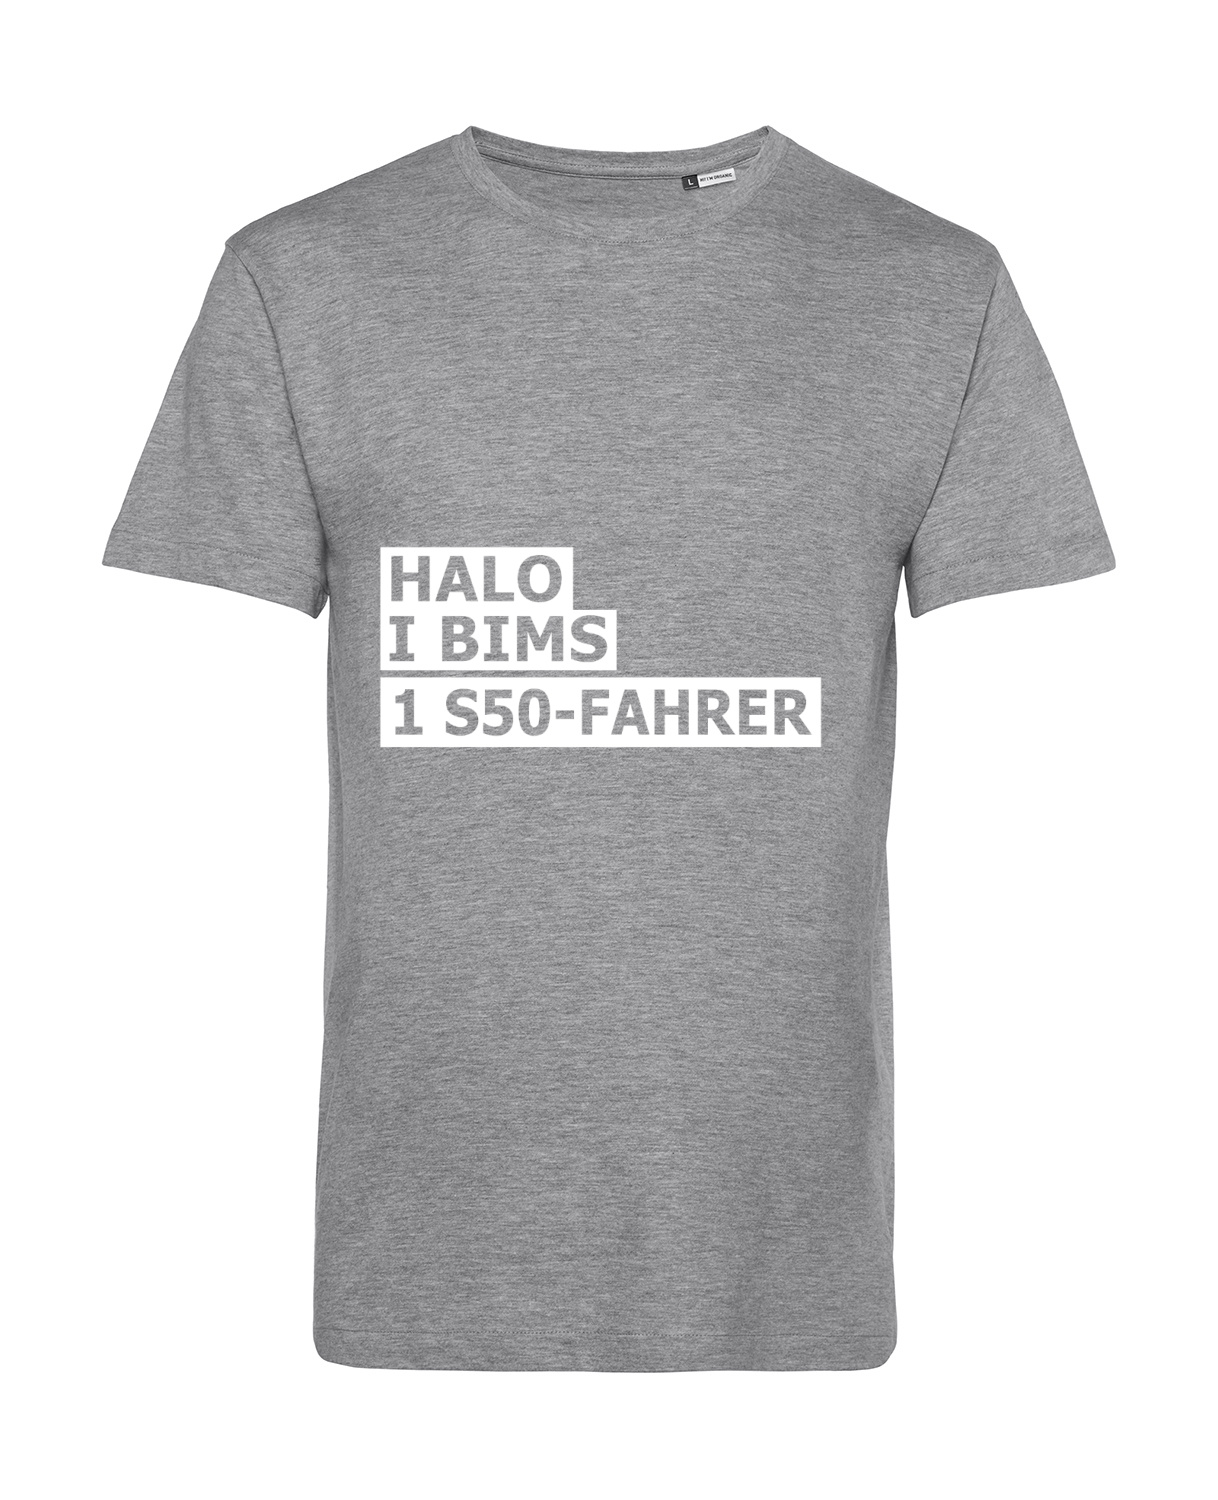 Nachhaltiges T-Shirt Herren 2Takter - Halo I bims 1 S50-Fahrer